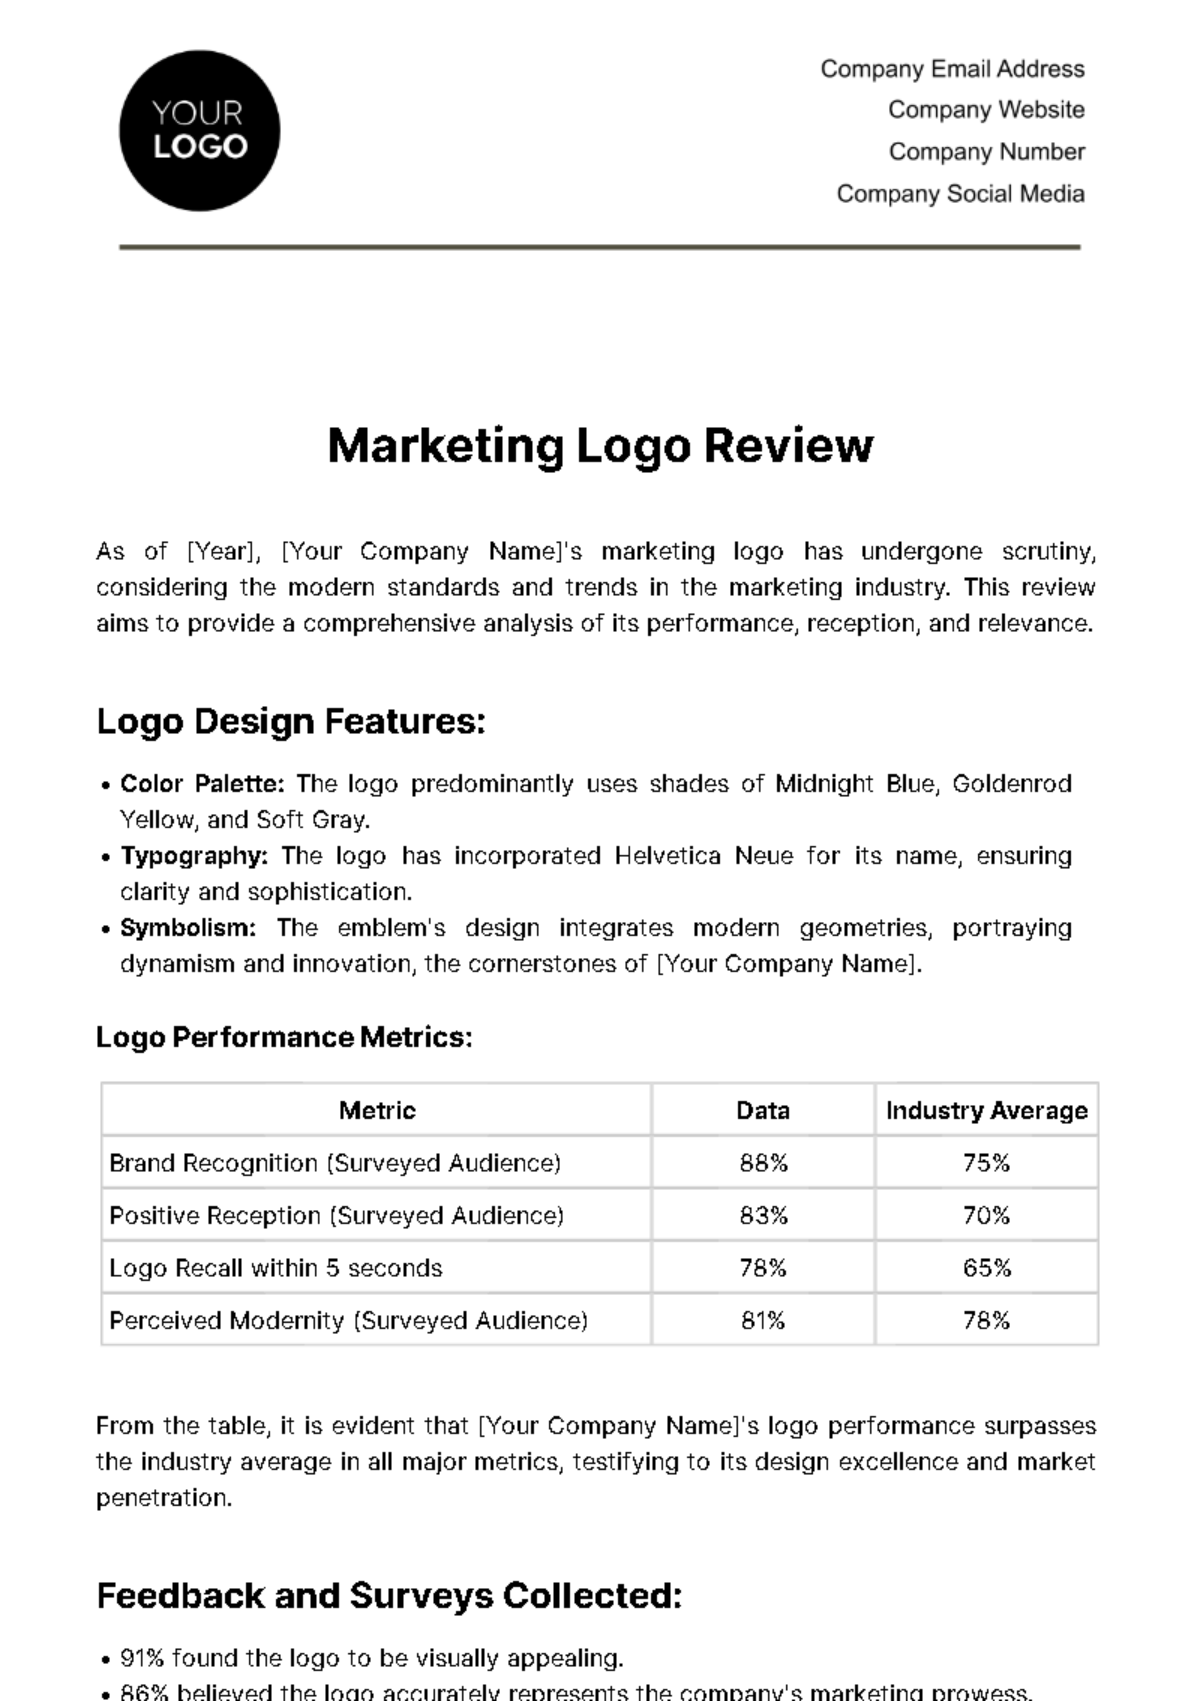 Marketing Logo Review Template